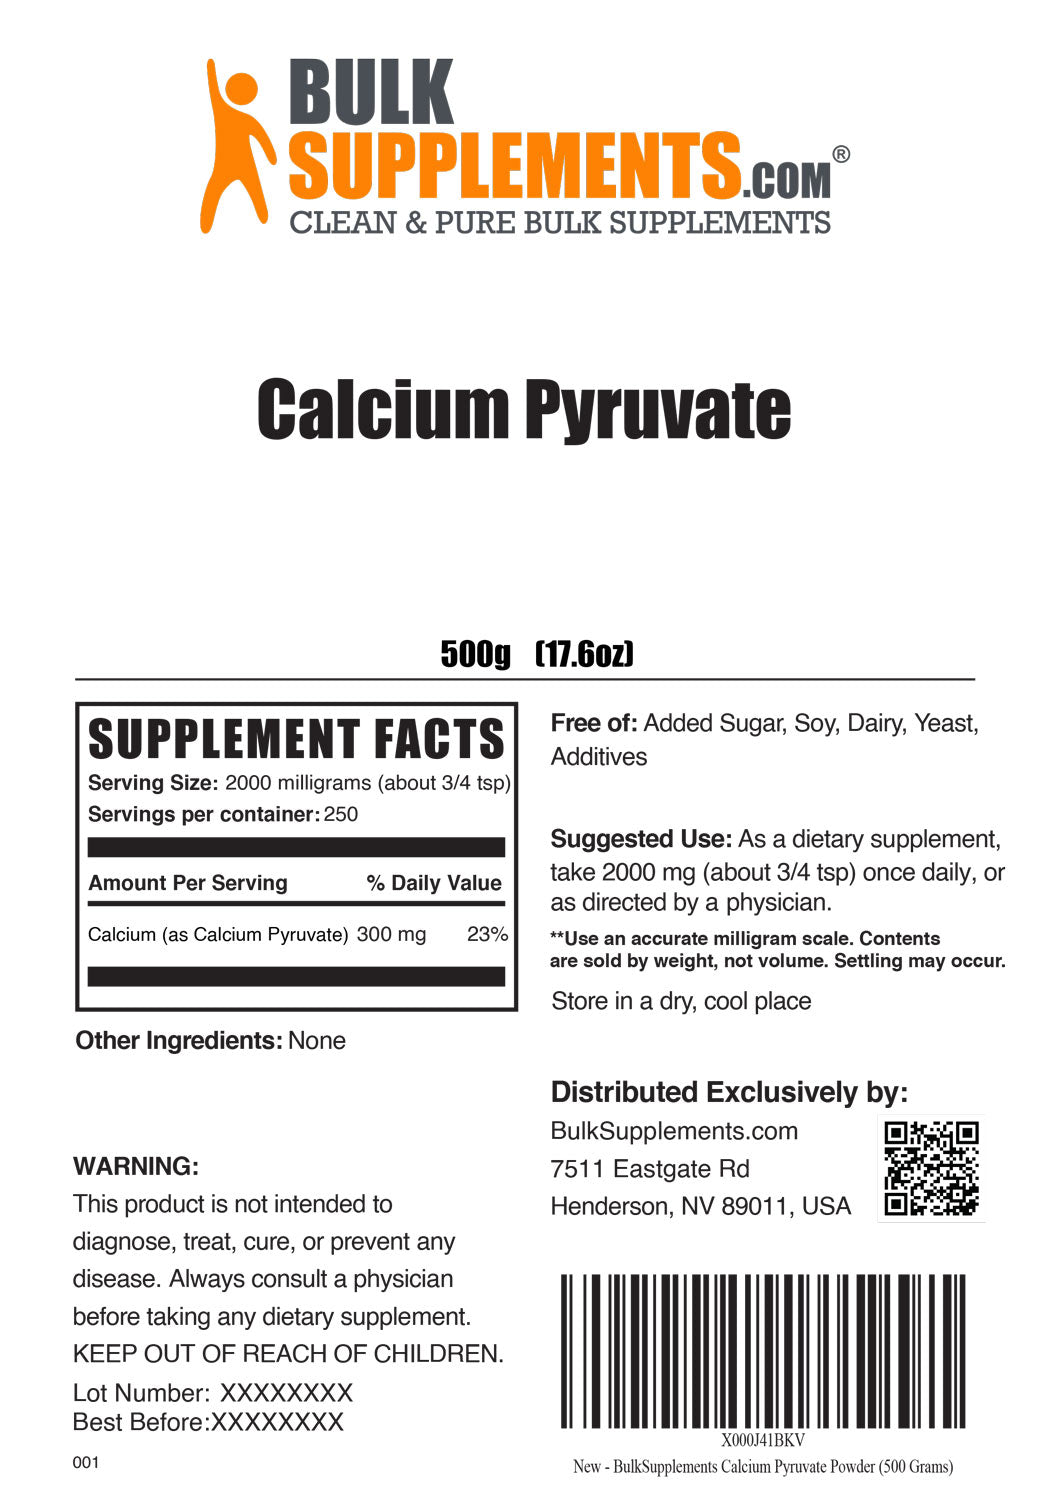 Bulk Supplements Creatine Monohydrate (Micronized) - Creatine Powder 17.6oz